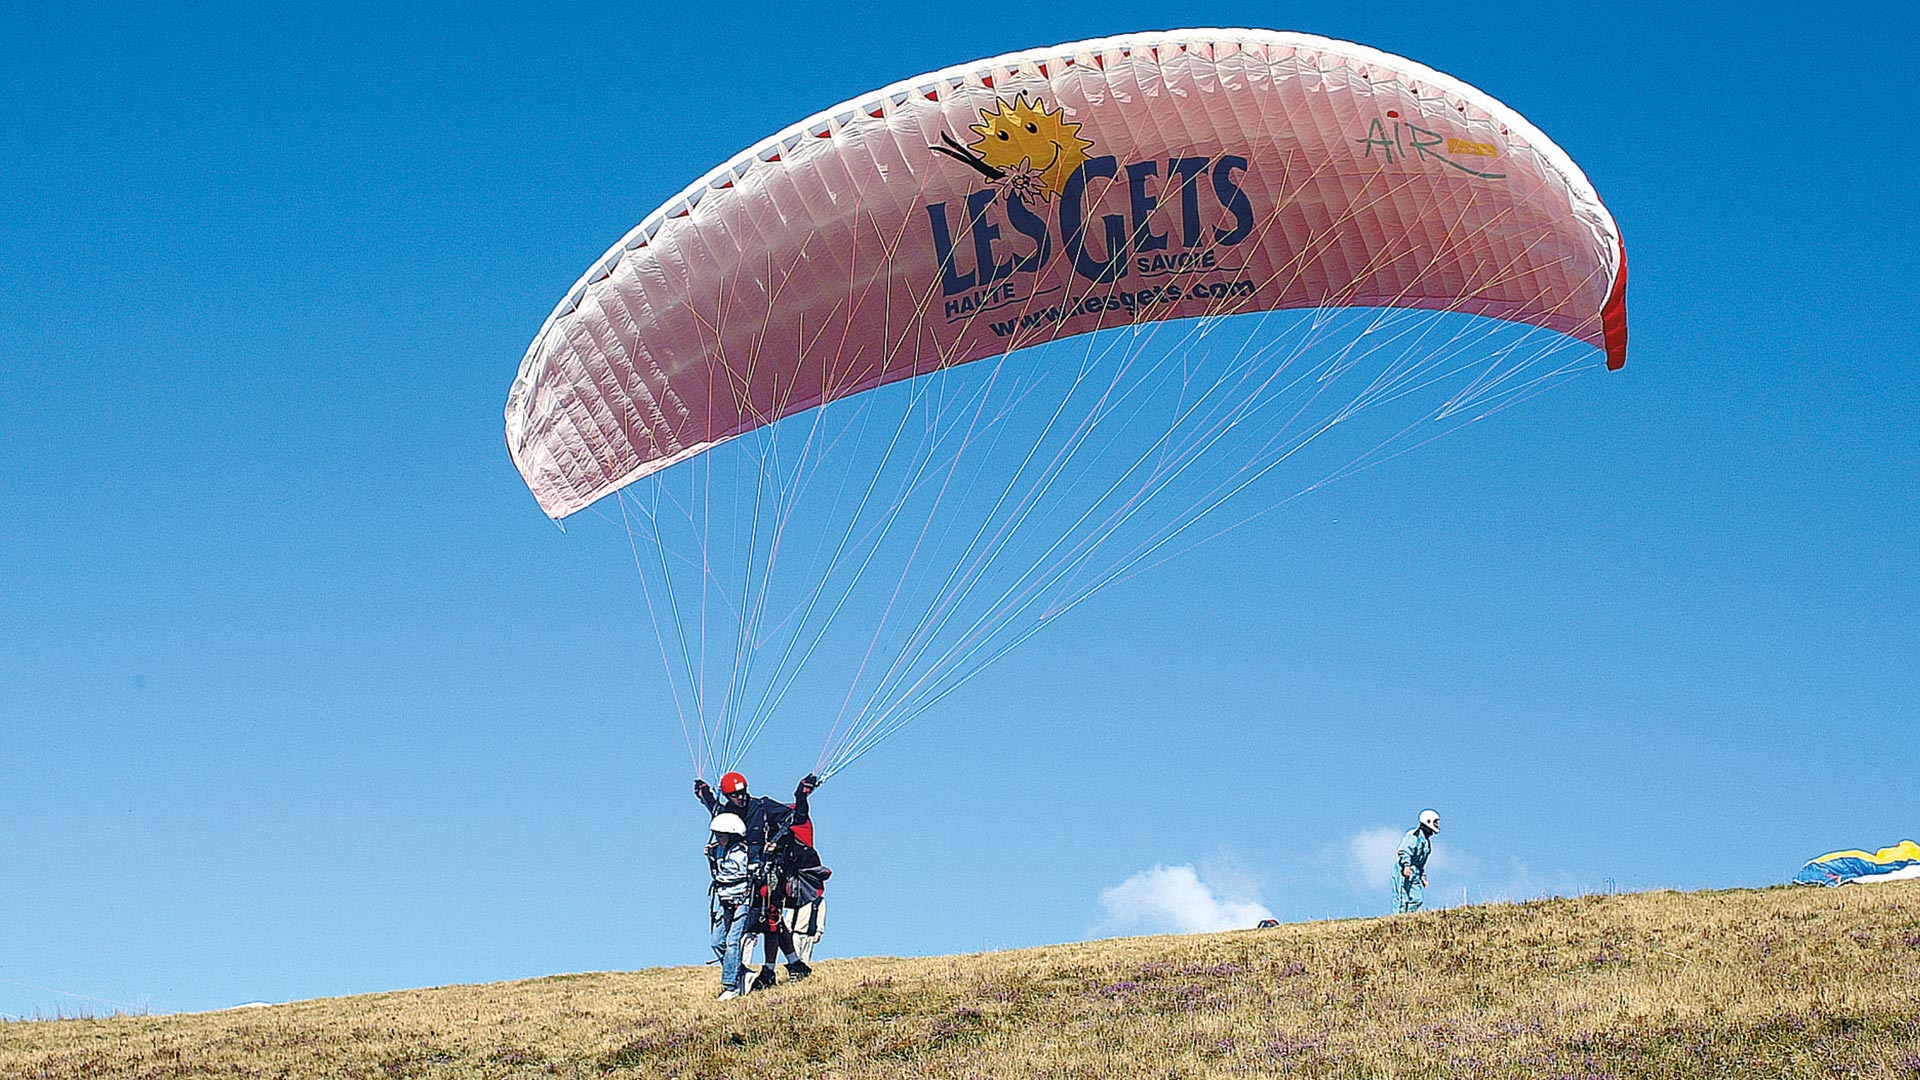 Paragliding gives a birdseye view